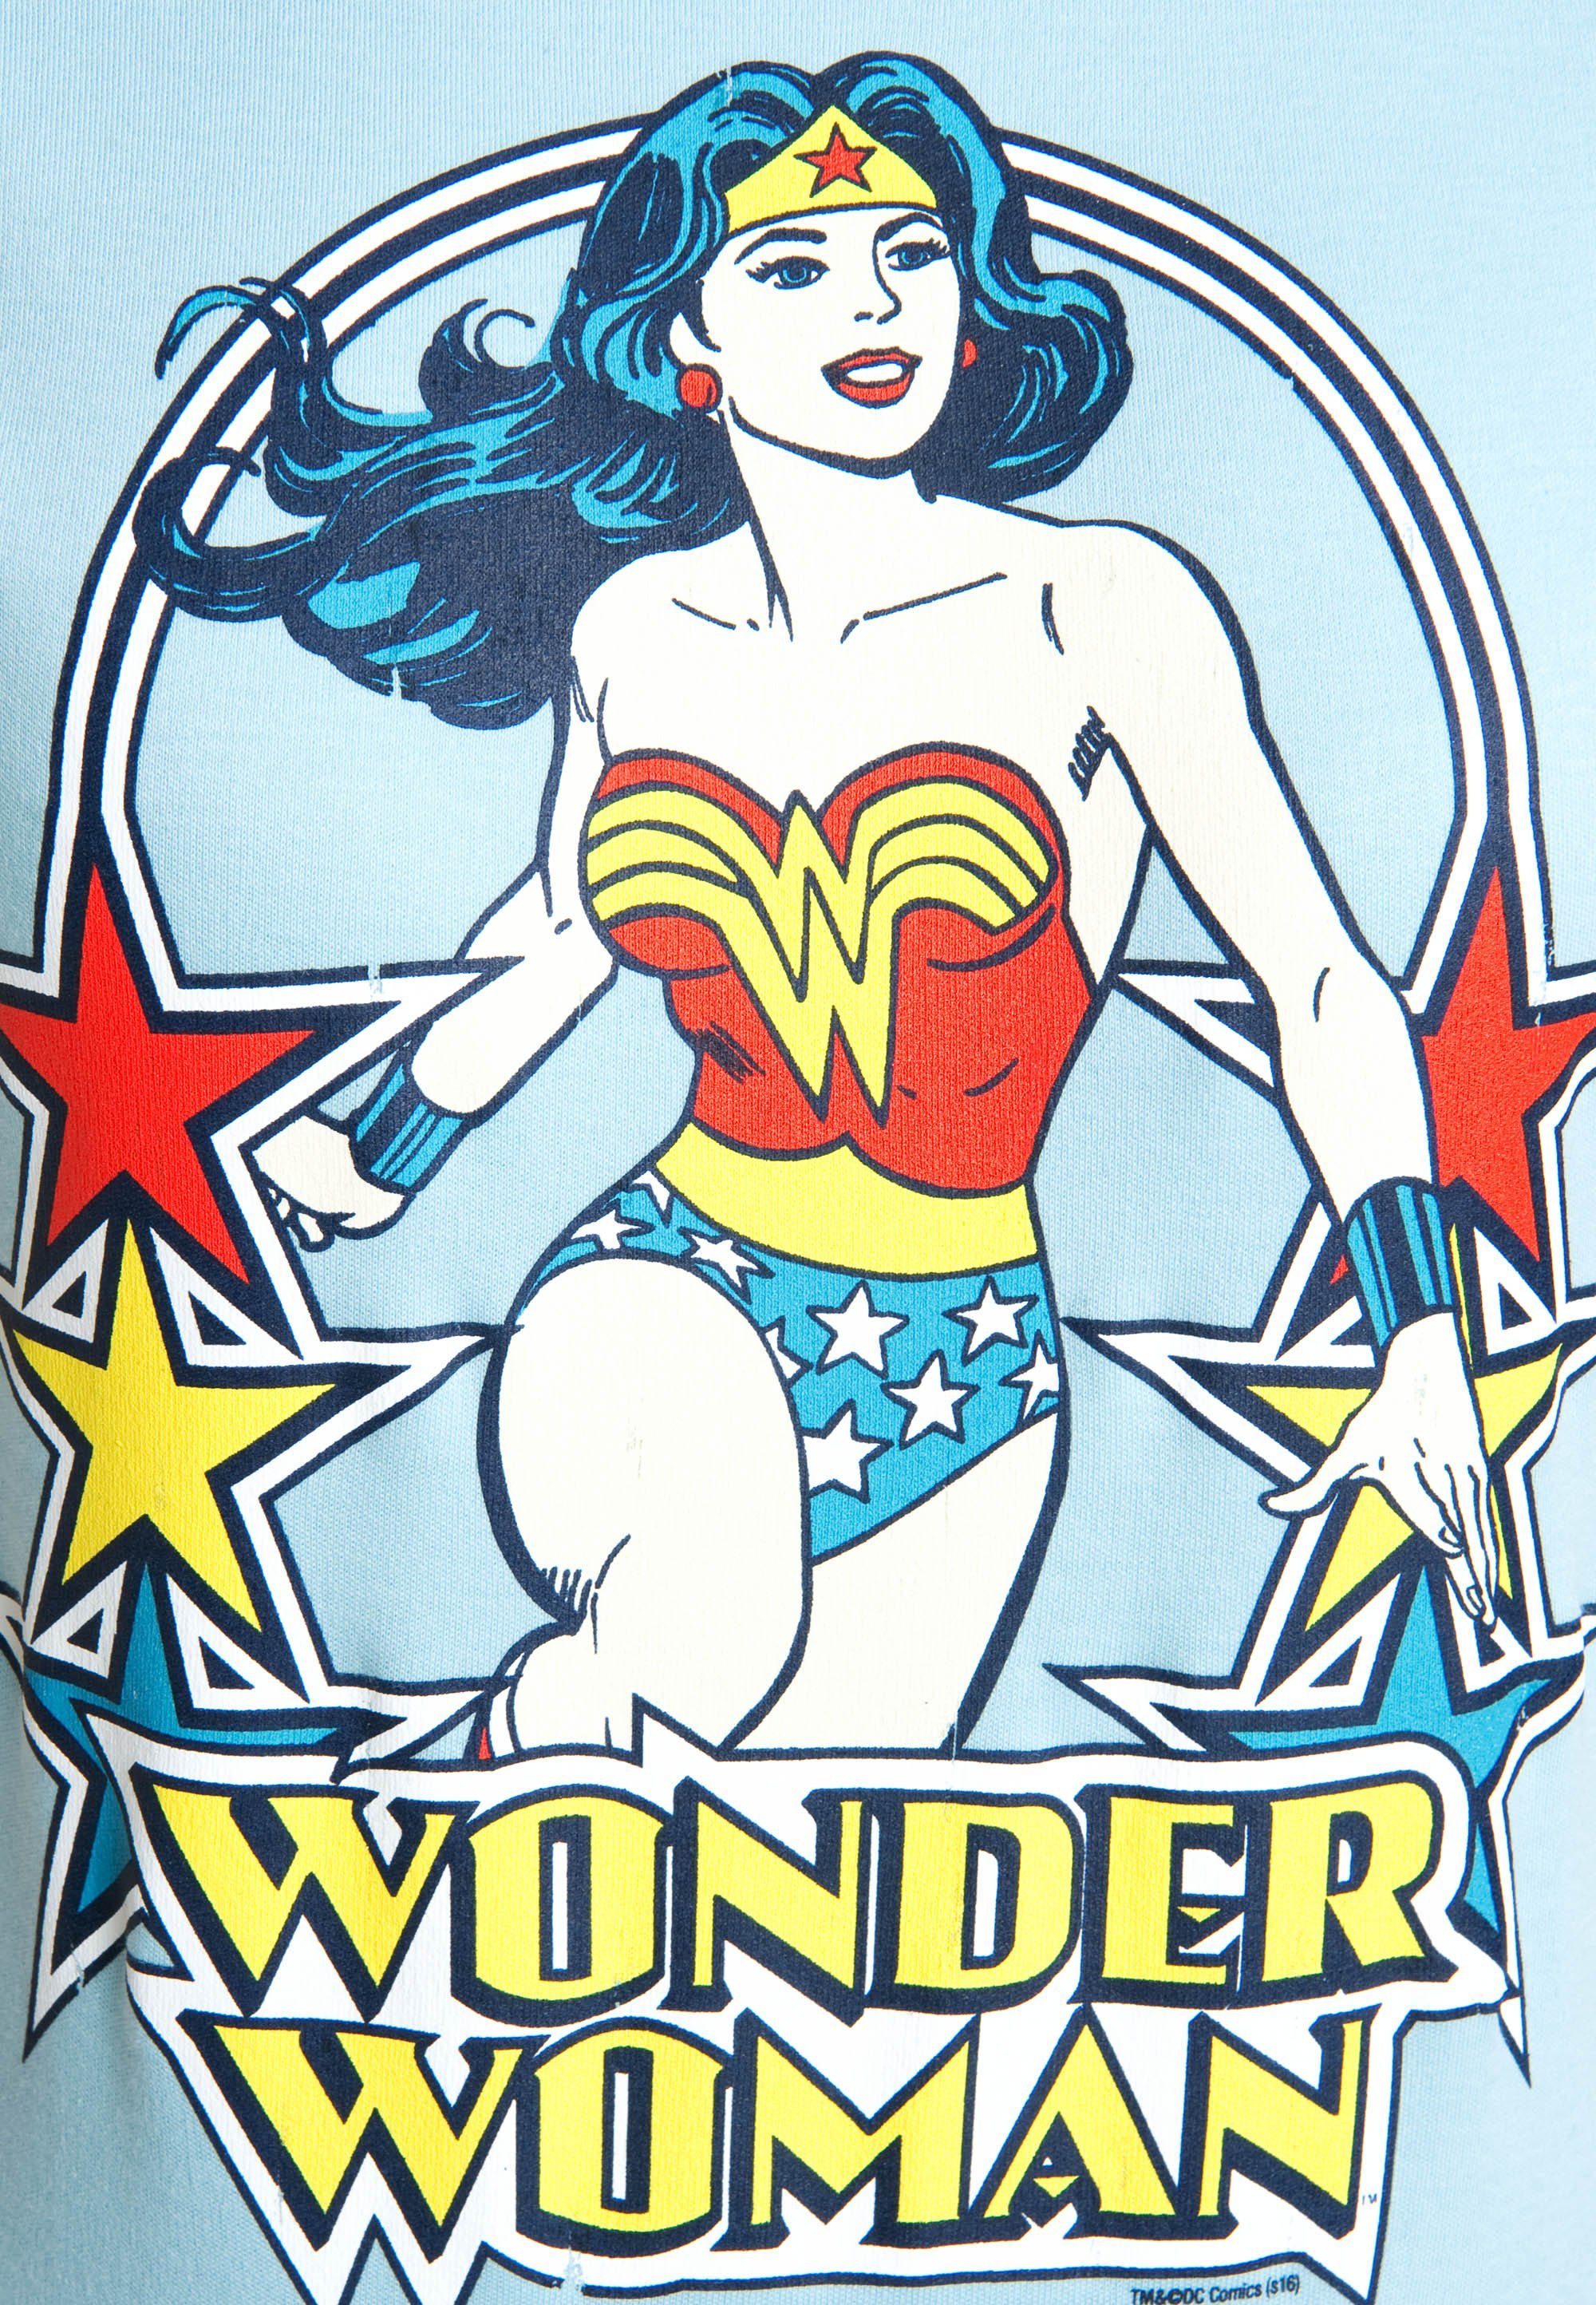 LOGOSHIRT T-Shirt Wonder Woman Stars – hellblau Originaldesign mit lizenziertem